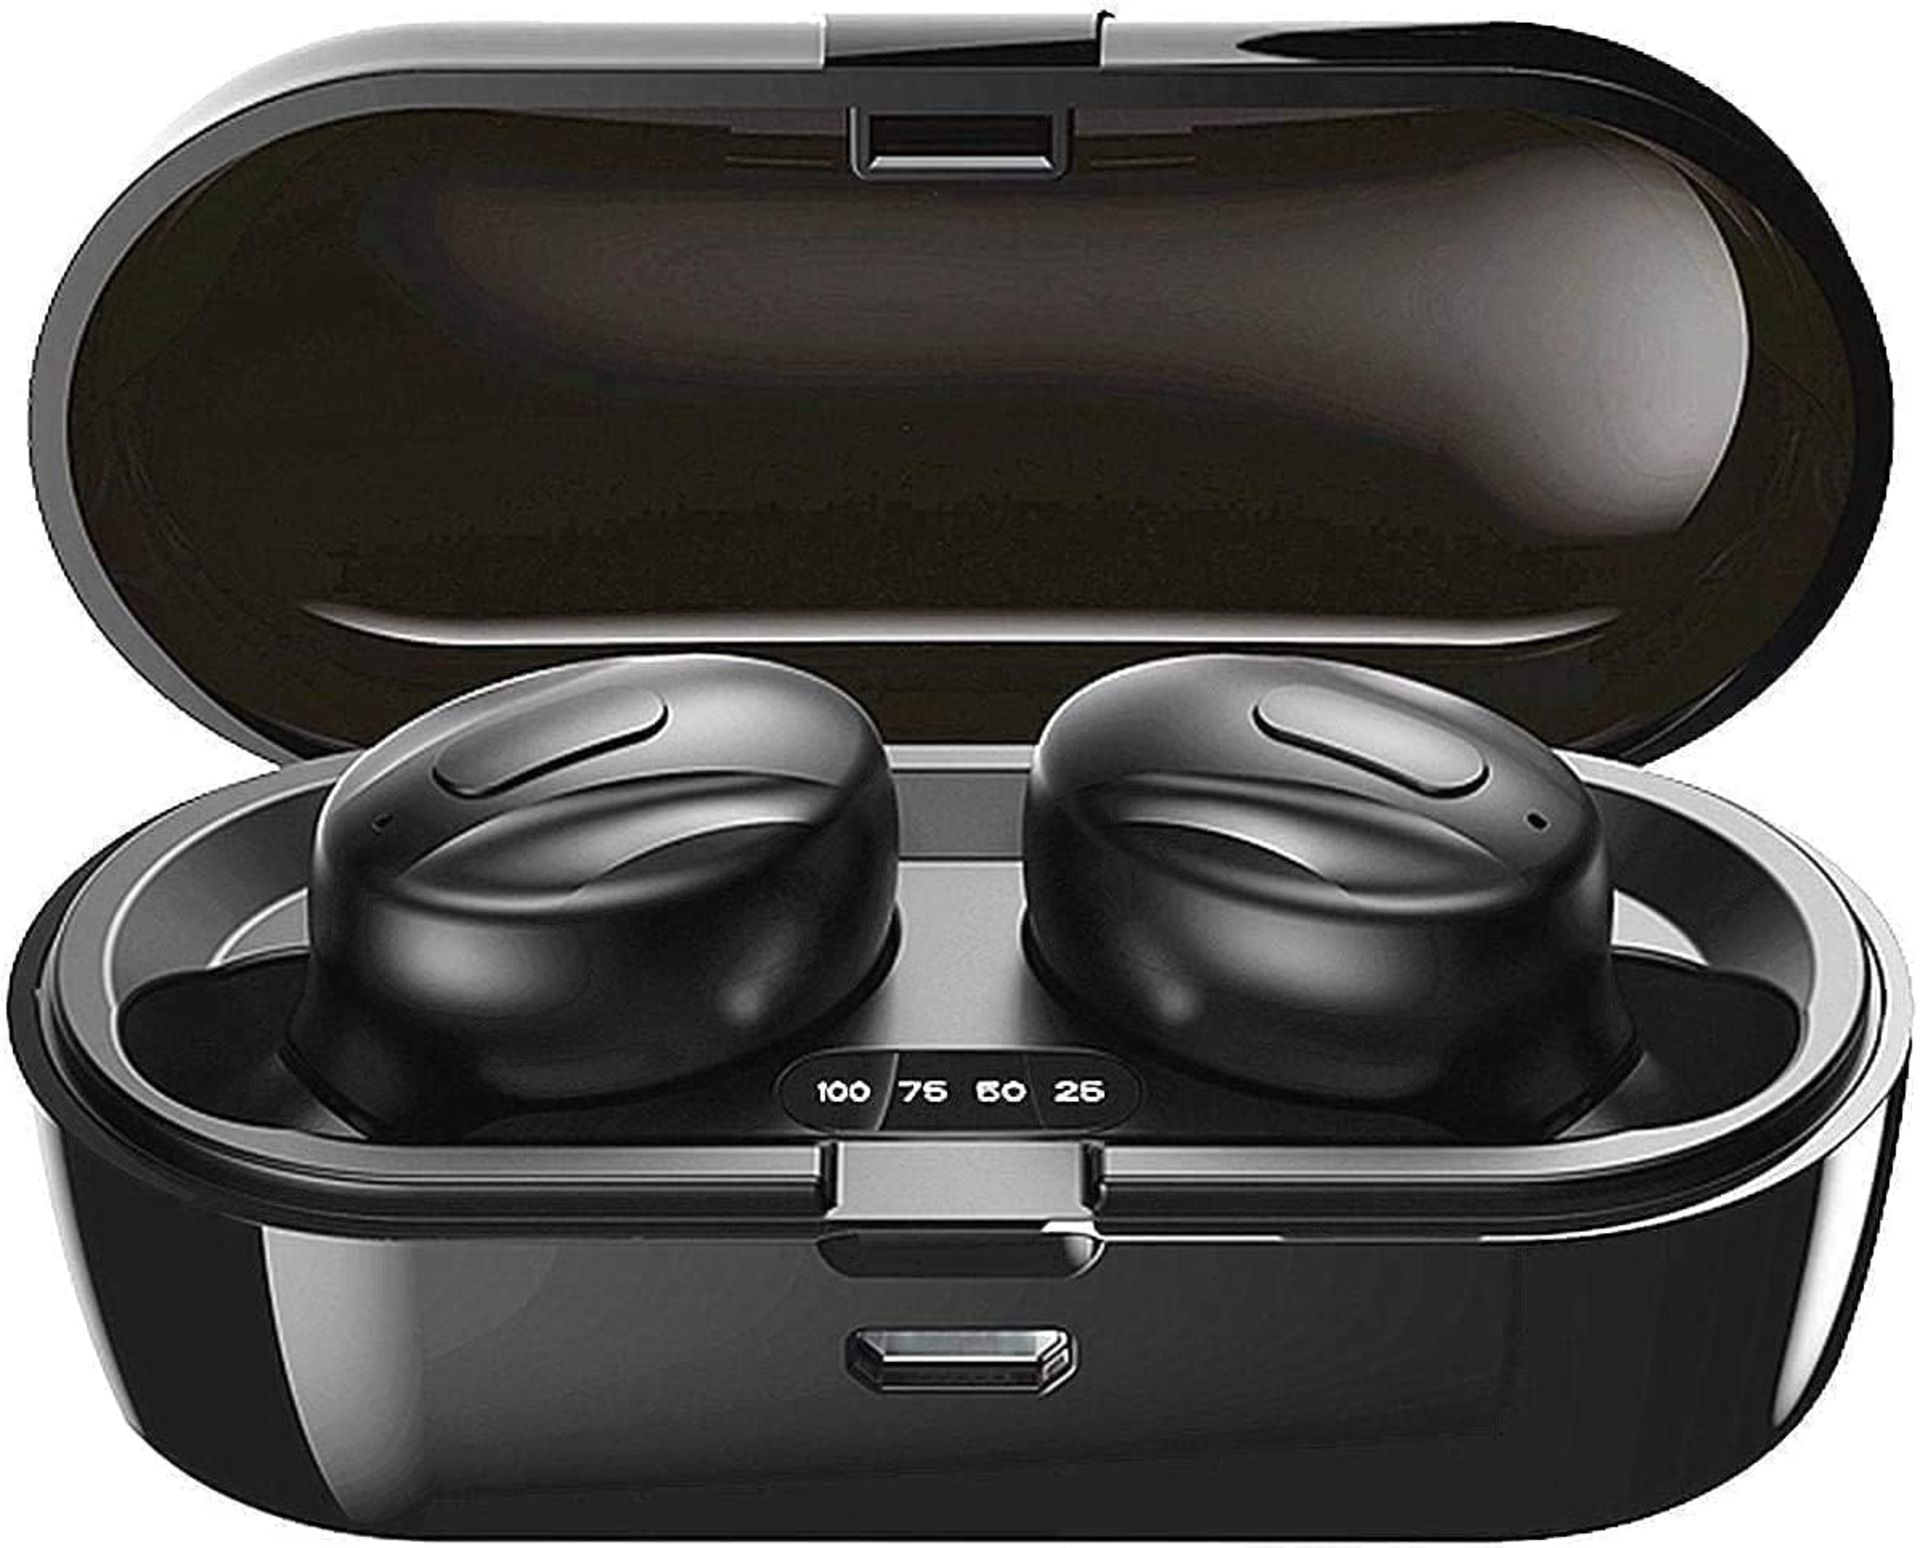 Xawy2022new editionBluetooth Headphones.Bluetooth 5.0 Wireless Earphones in-Ear Stereo Sound